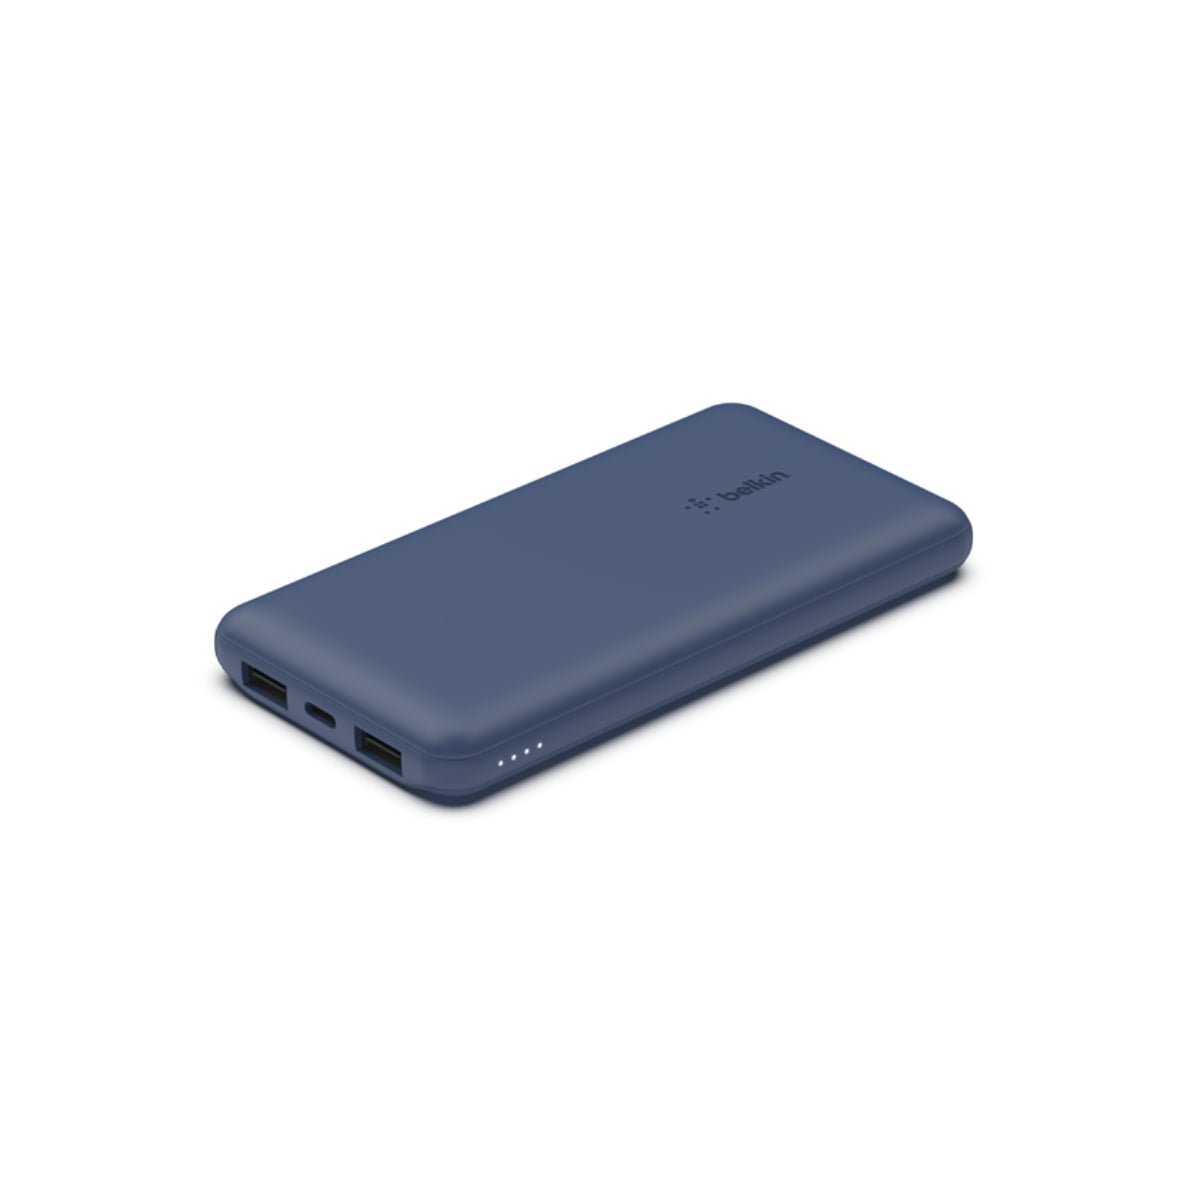 Belkin 10,000 mAh 15W USB-C Power Bank - Blue - مزود طاقة - Store 974 | ستور ٩٧٤